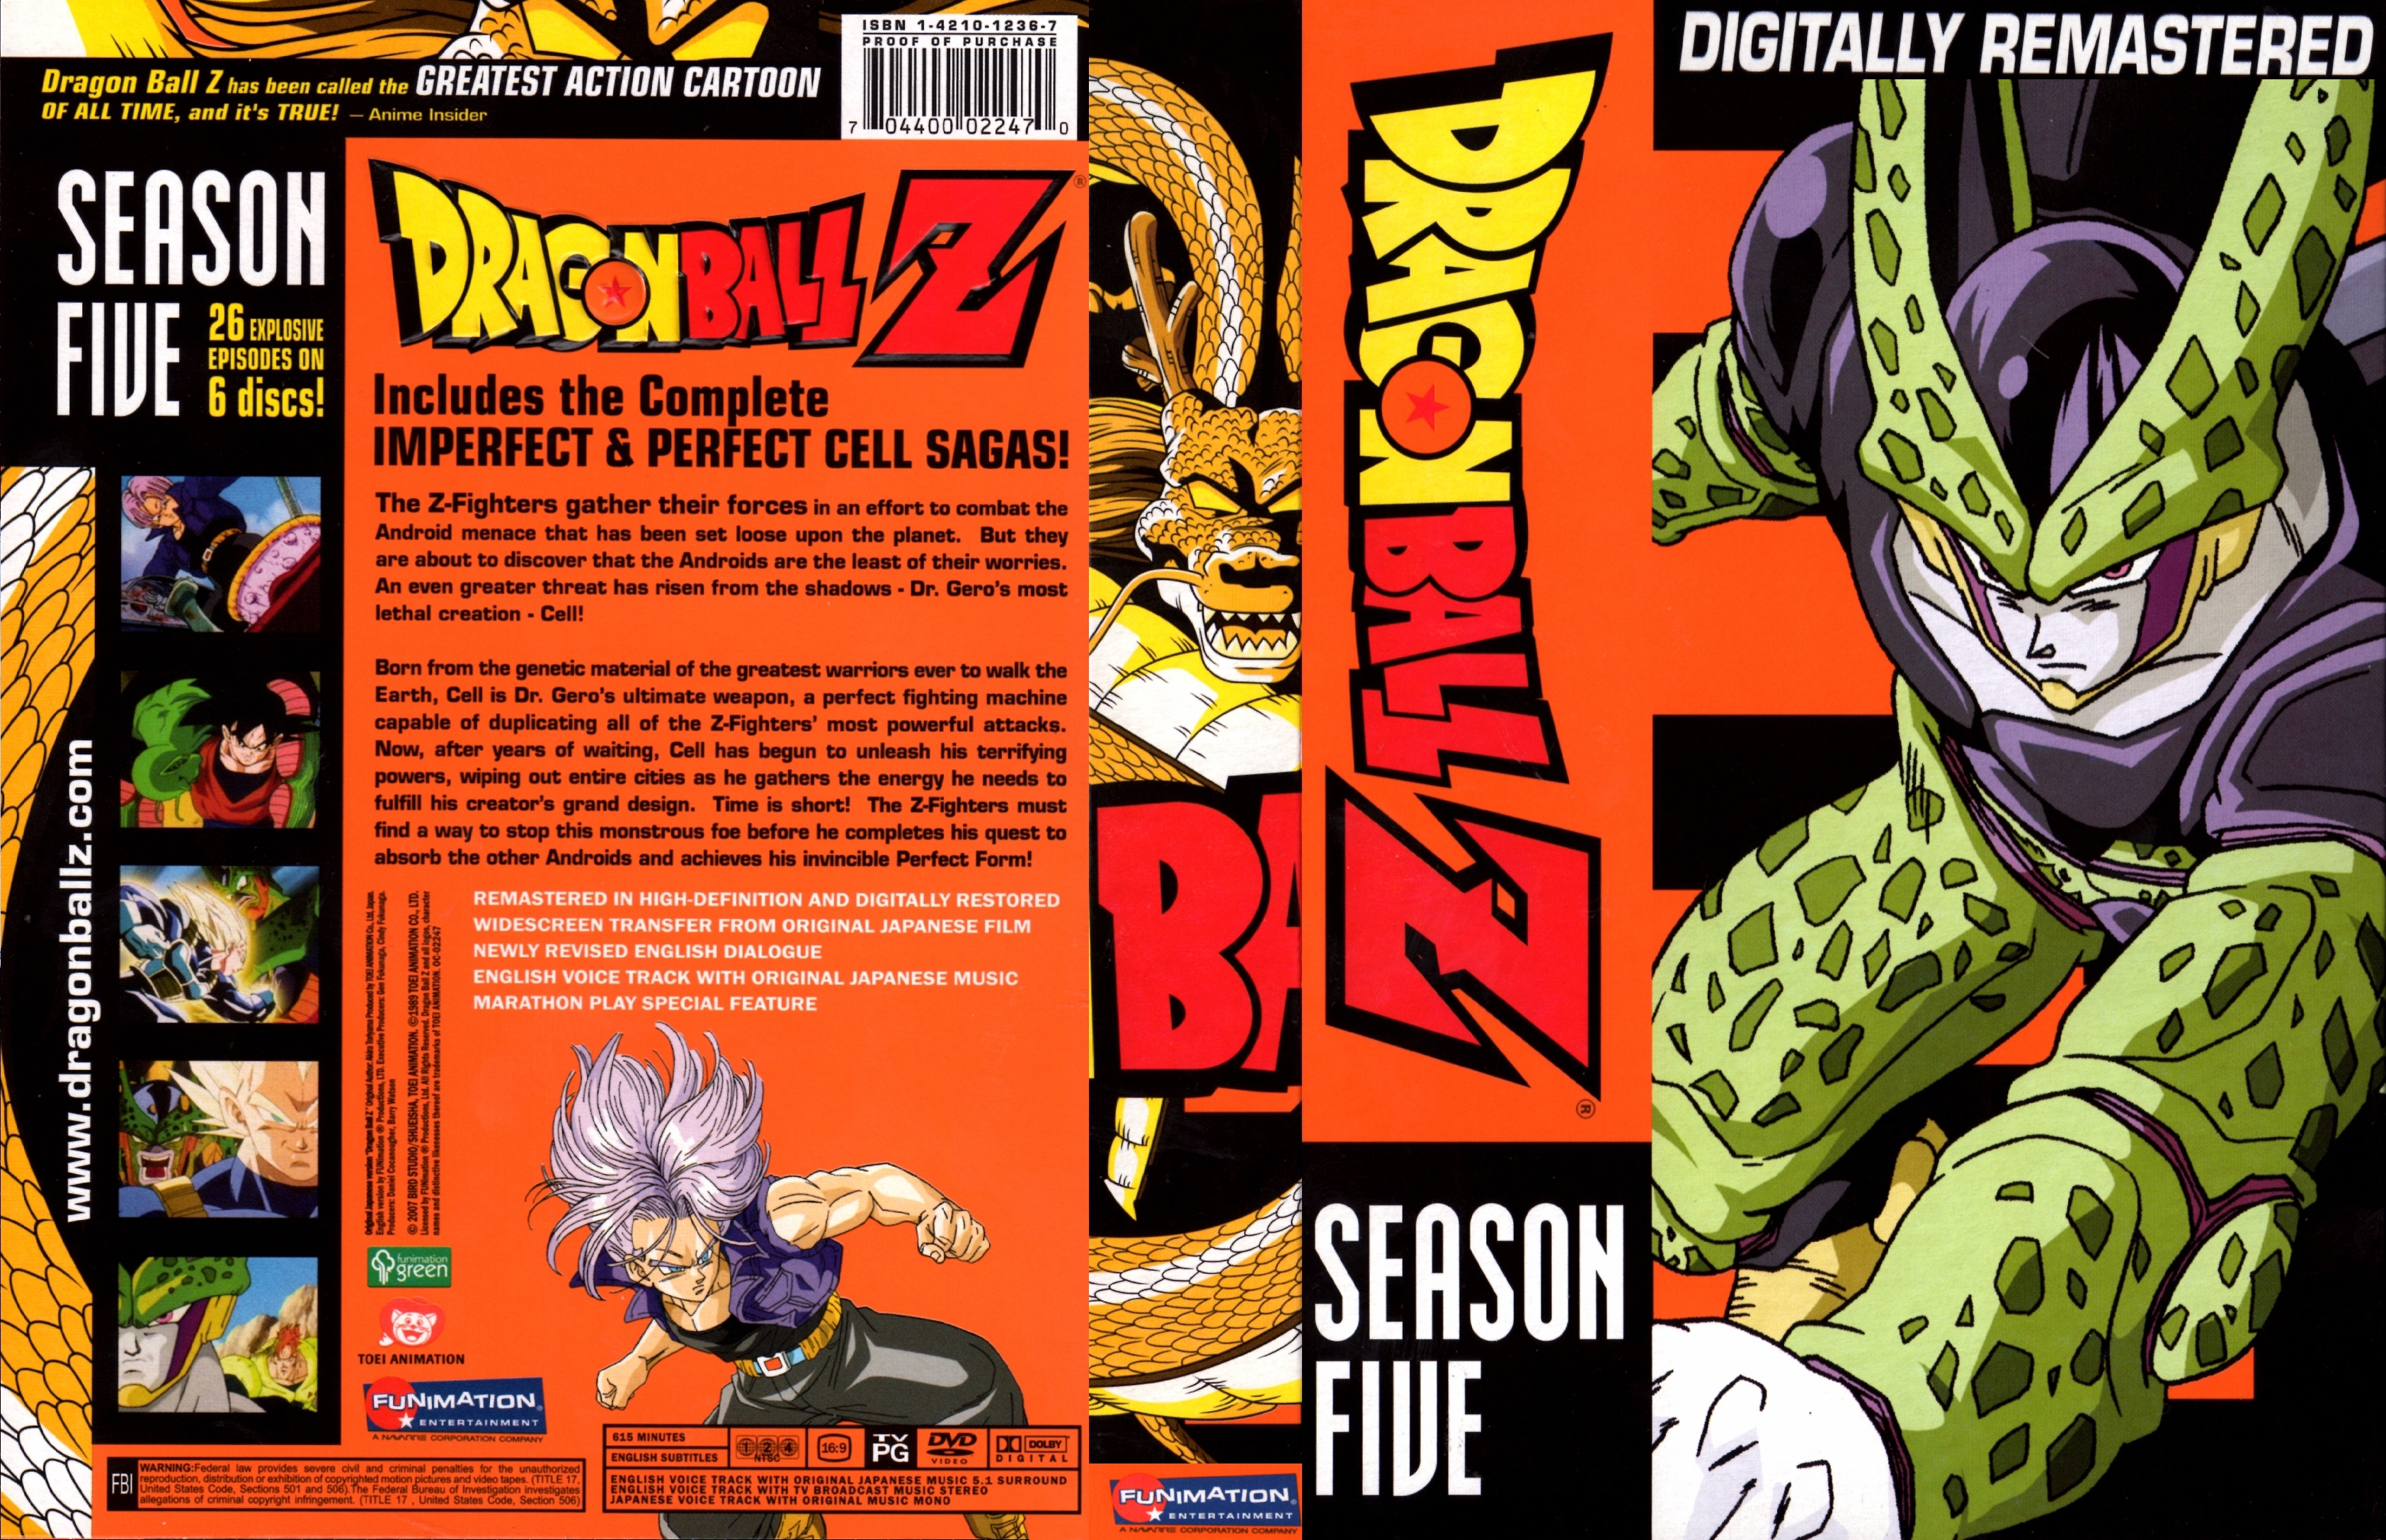 Dragonballz Season 5 Dvd Covers Cover Century Over 500 000 Album Art Covers For Free